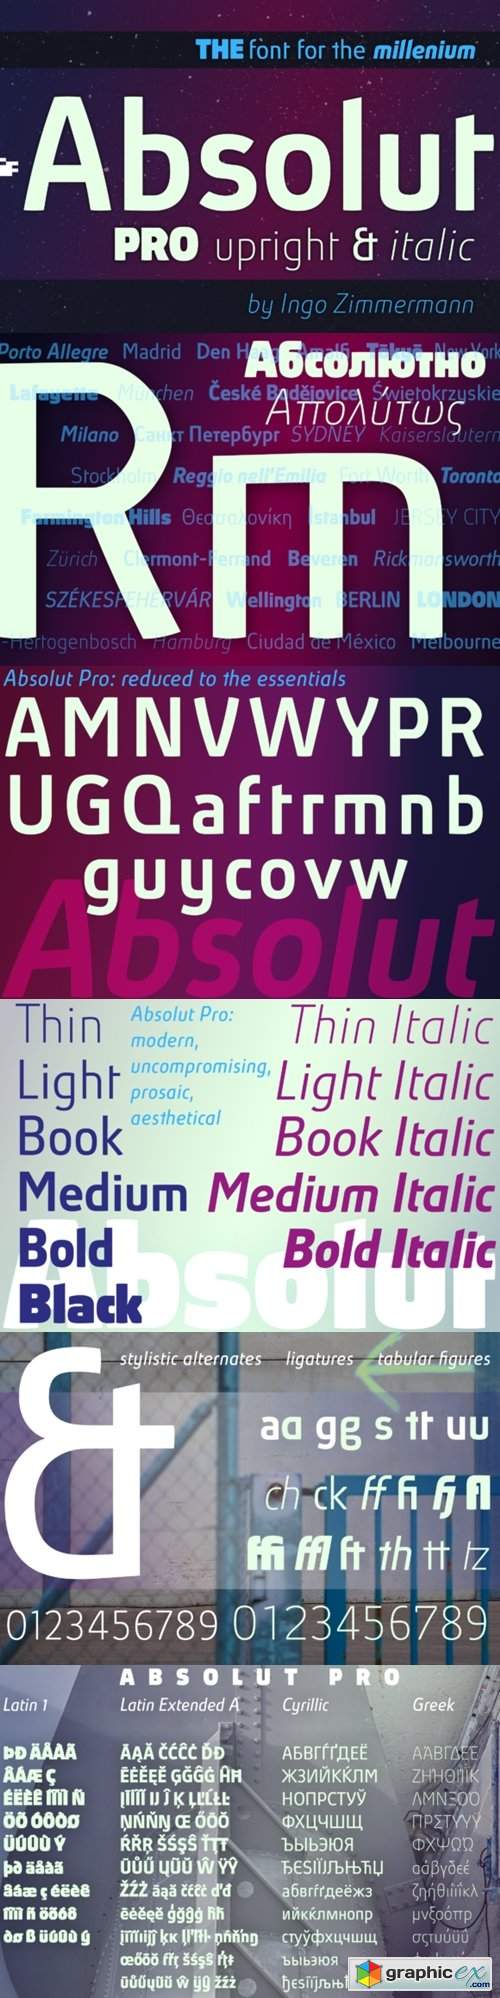 Absolut Pro Upright & Italic Font